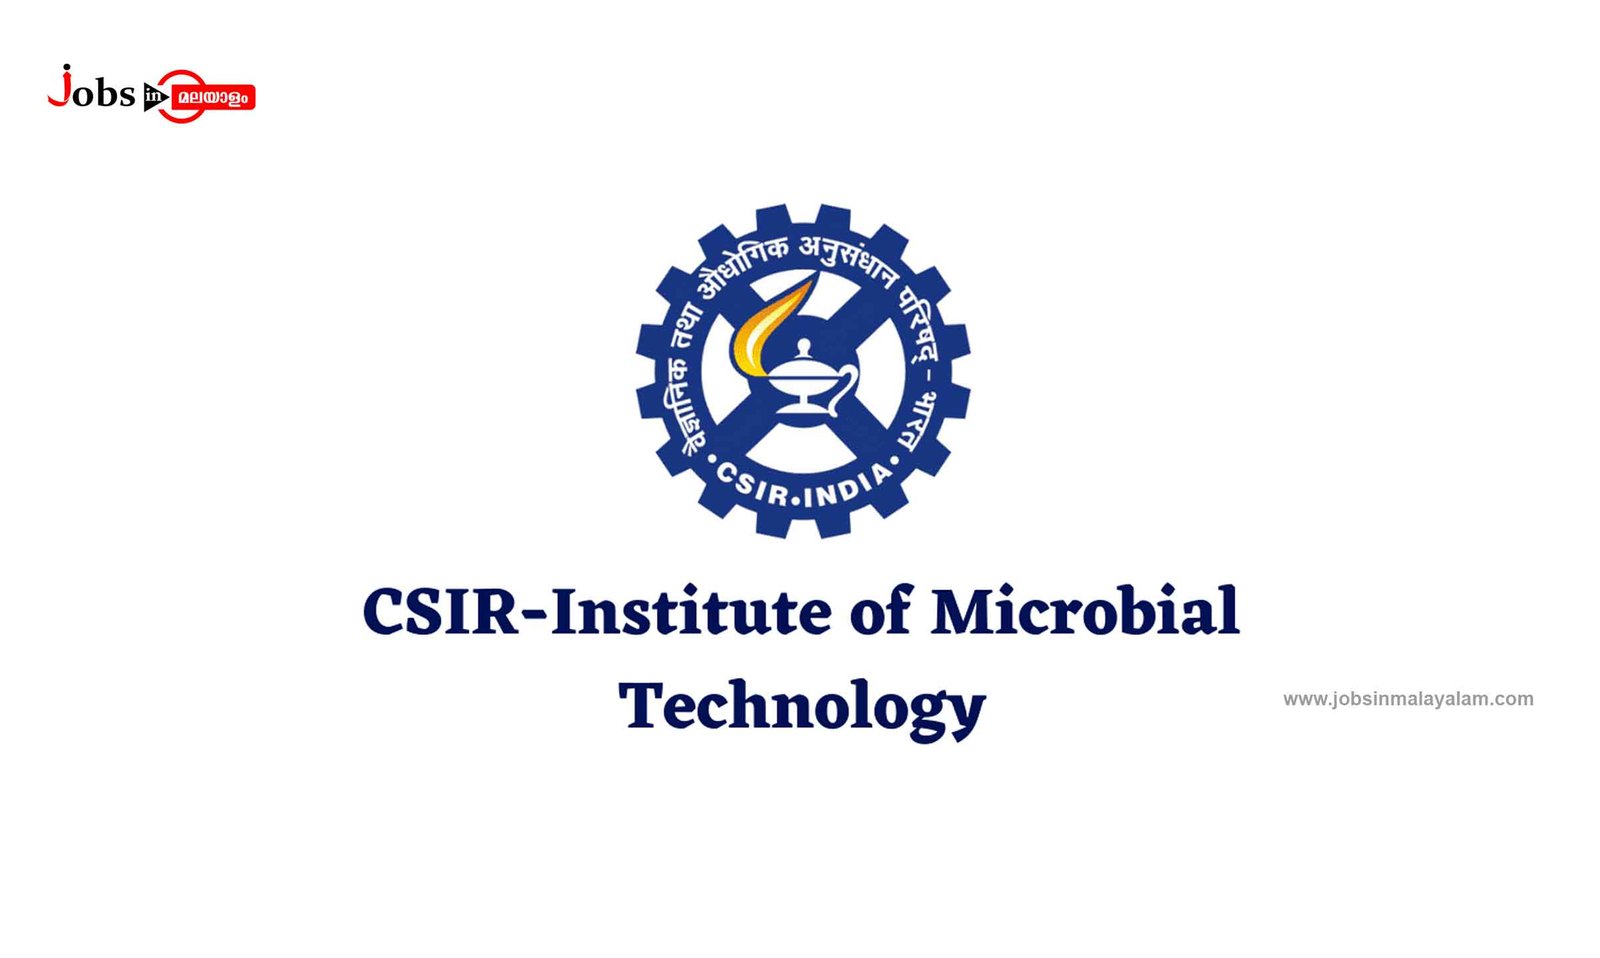 CSIR-Institute of Microbial Technology (CSIR-IMTECH)